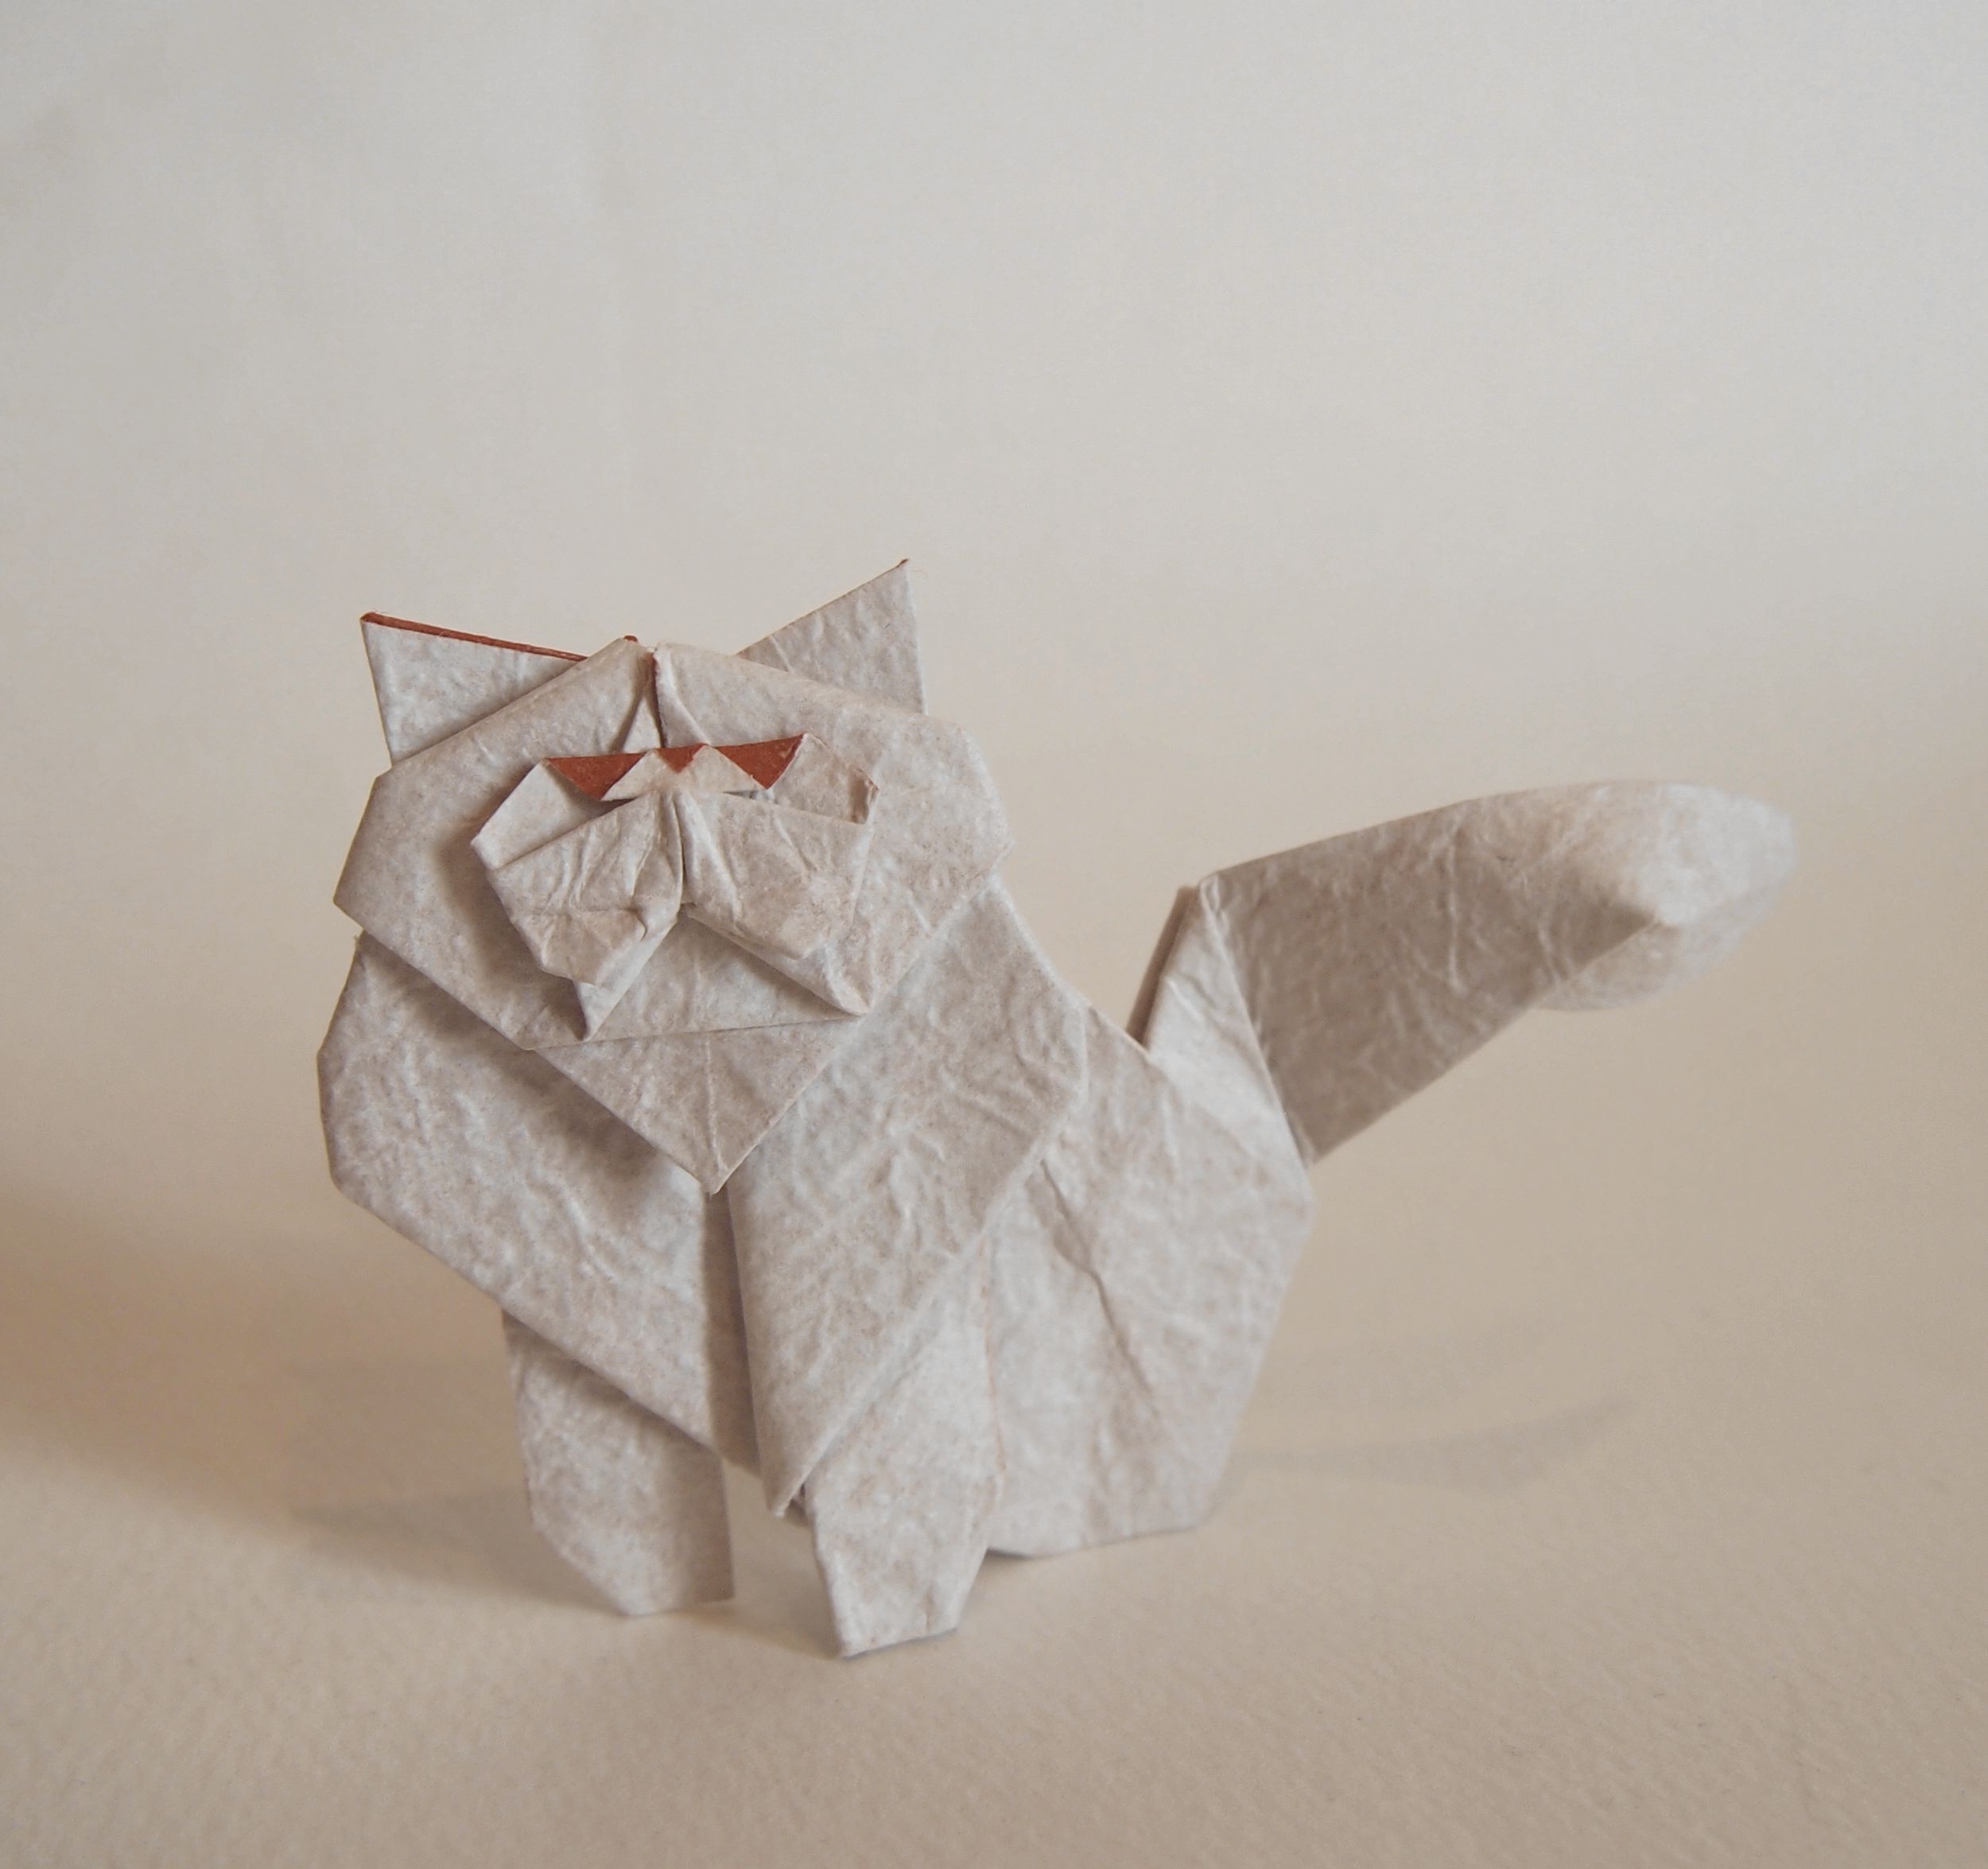 Twitter 上的 一匹柴犬 モササウルス 創作 Meng Weining ペルシャ猫 創作 Meng Weining 蜂マーク 創作 Mi Wu 馬人間 トロンボーン 創作 有澤悠河 折り手 一匹柴犬 折り紙 Origami T Co Wxwfeqrlg3 Twitter